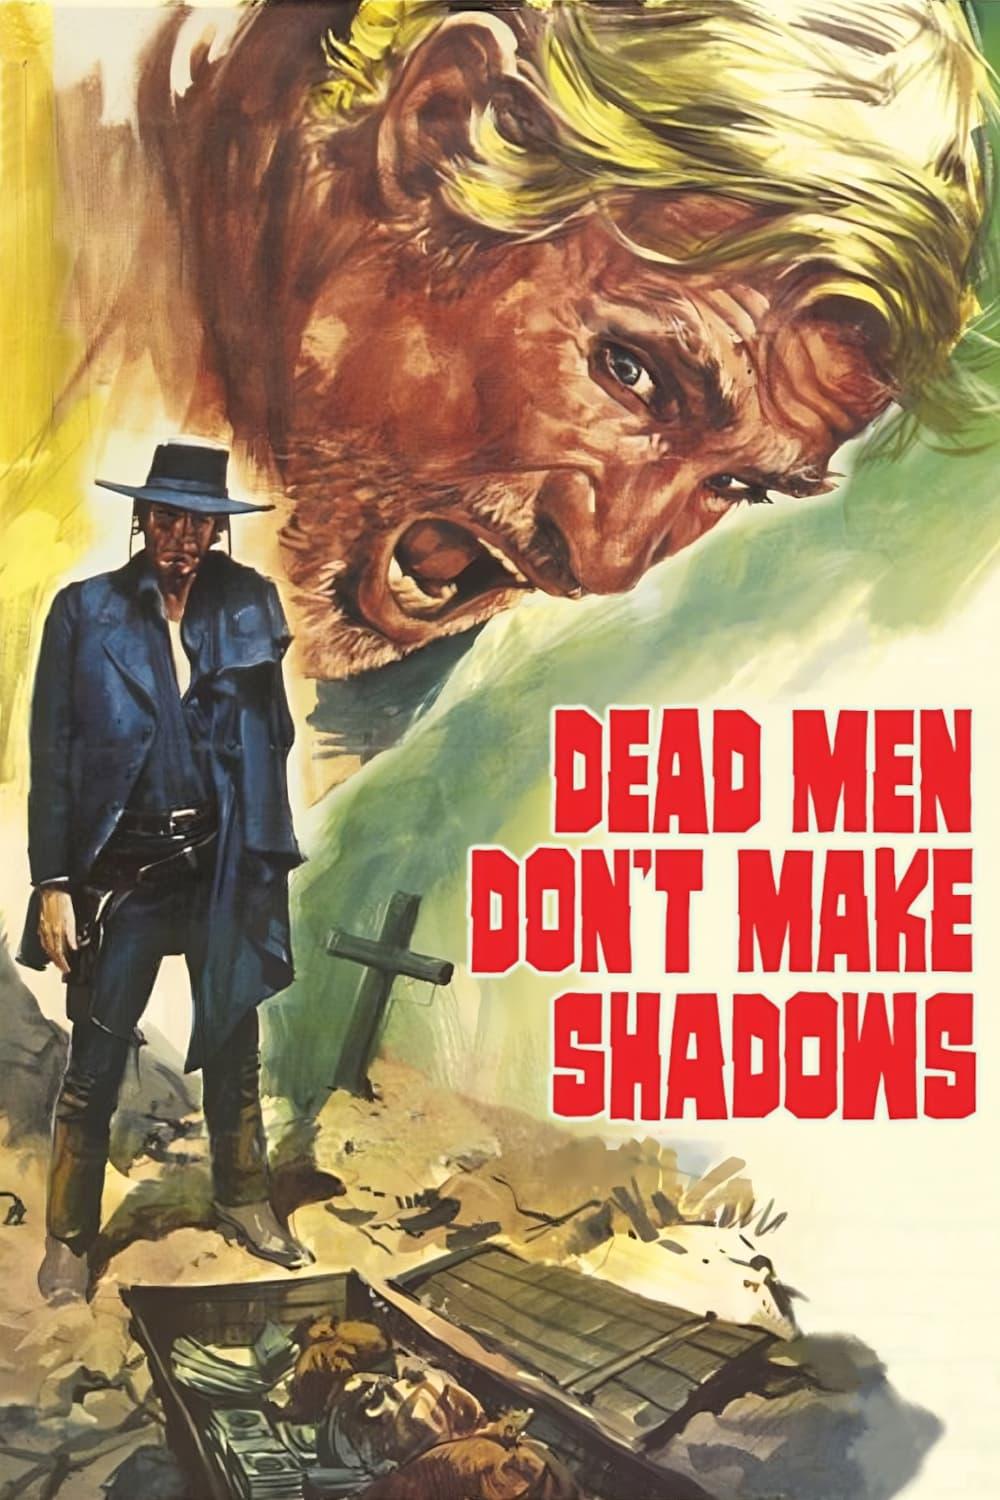 Dead Men Don't Make Shadows poster